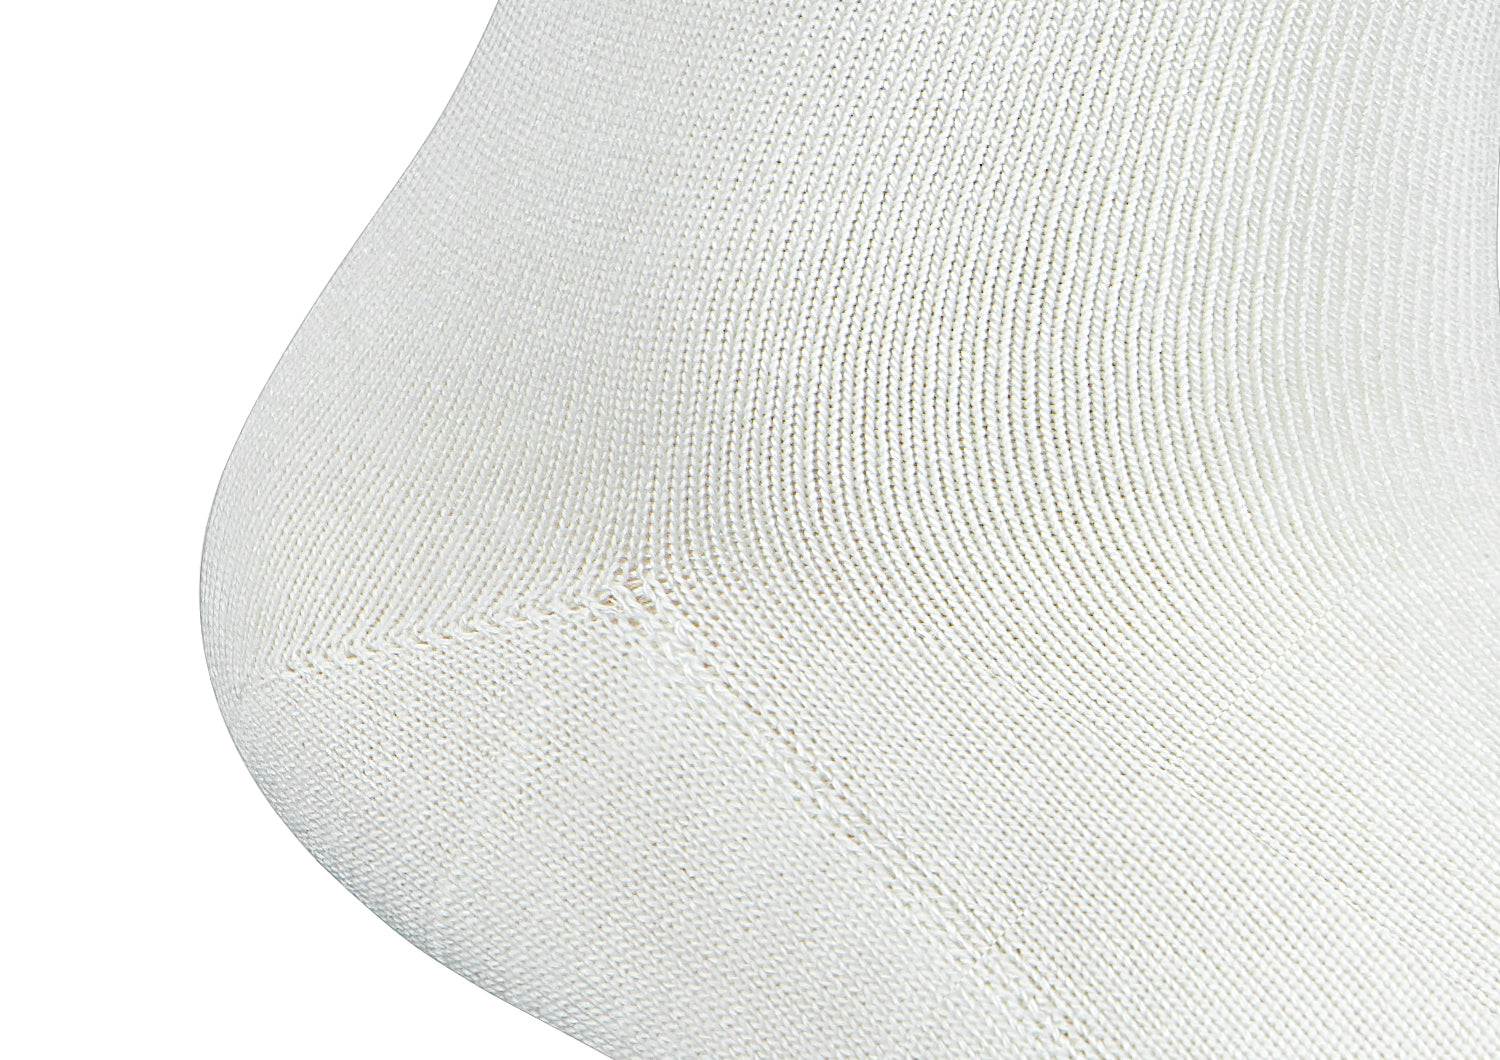 Casual/Dress Diabetic Socks - White